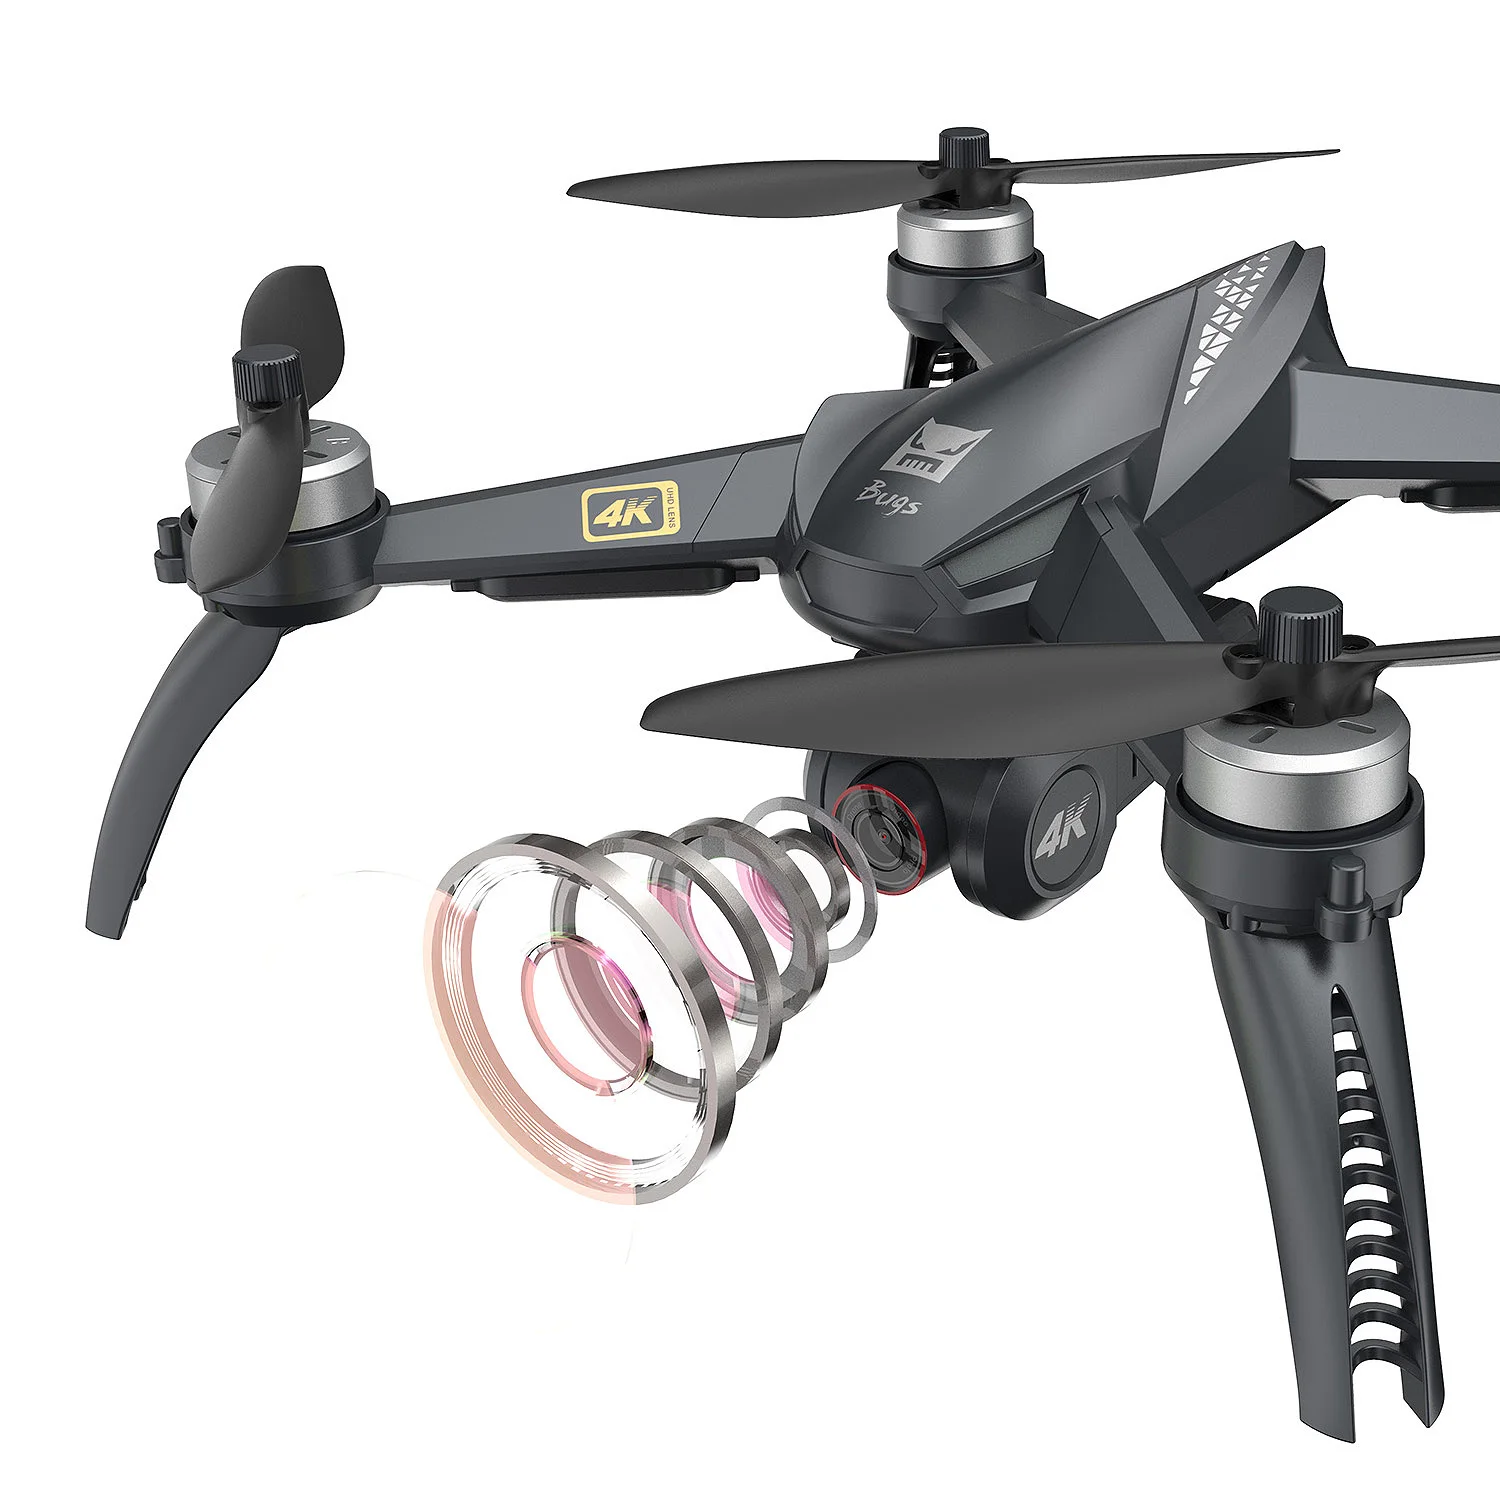 

Latest Upgraded MJX B5W Drone Bugs 5W 5G Drone With 4k HD Camera WIFI FPV GPS Follow Me Drone Quadcopter Brushless Professional, Dark grey